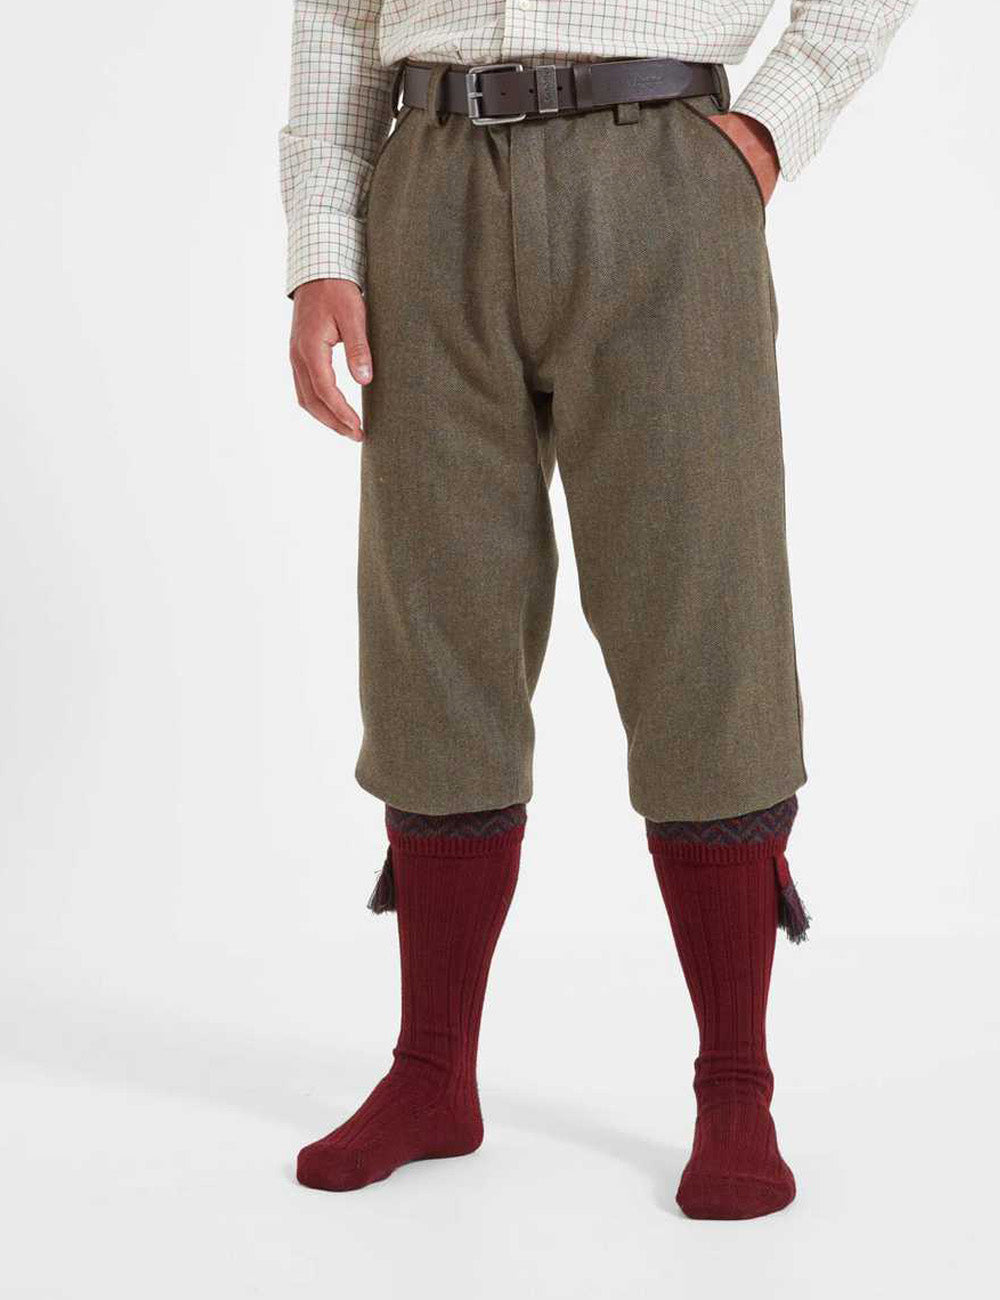 Schoffel Ptarmigan Tweed Plus Twos - Loden Green Herringbone Tweed